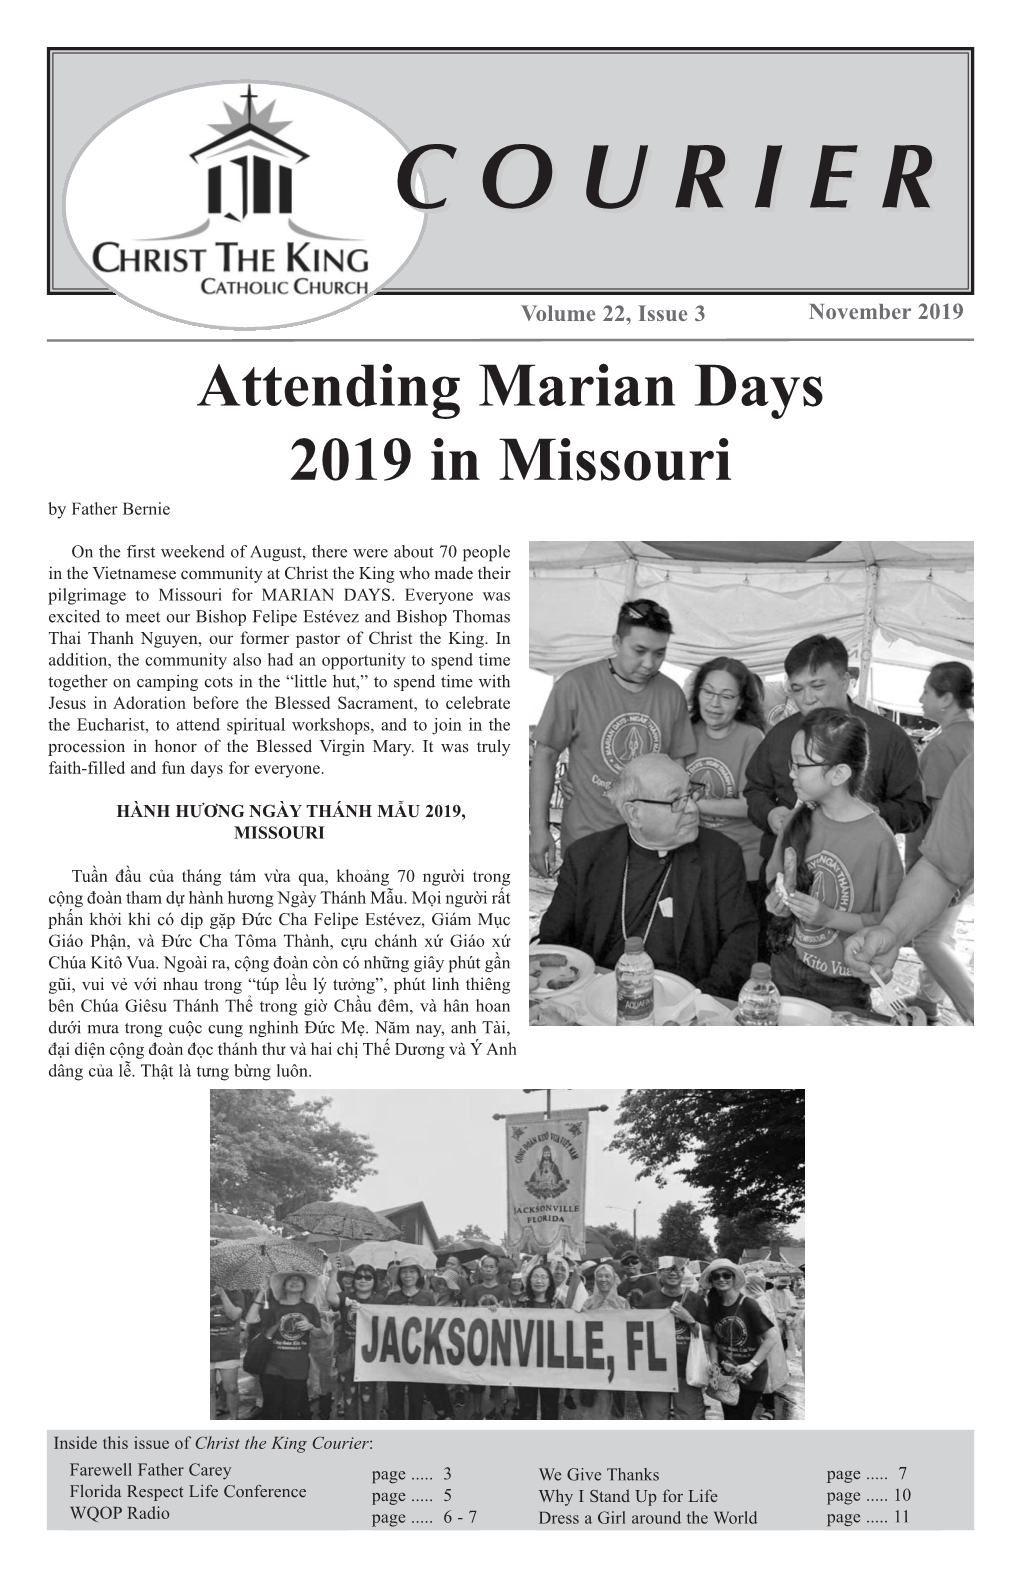 Attending Marian Days 2019 in Missouri